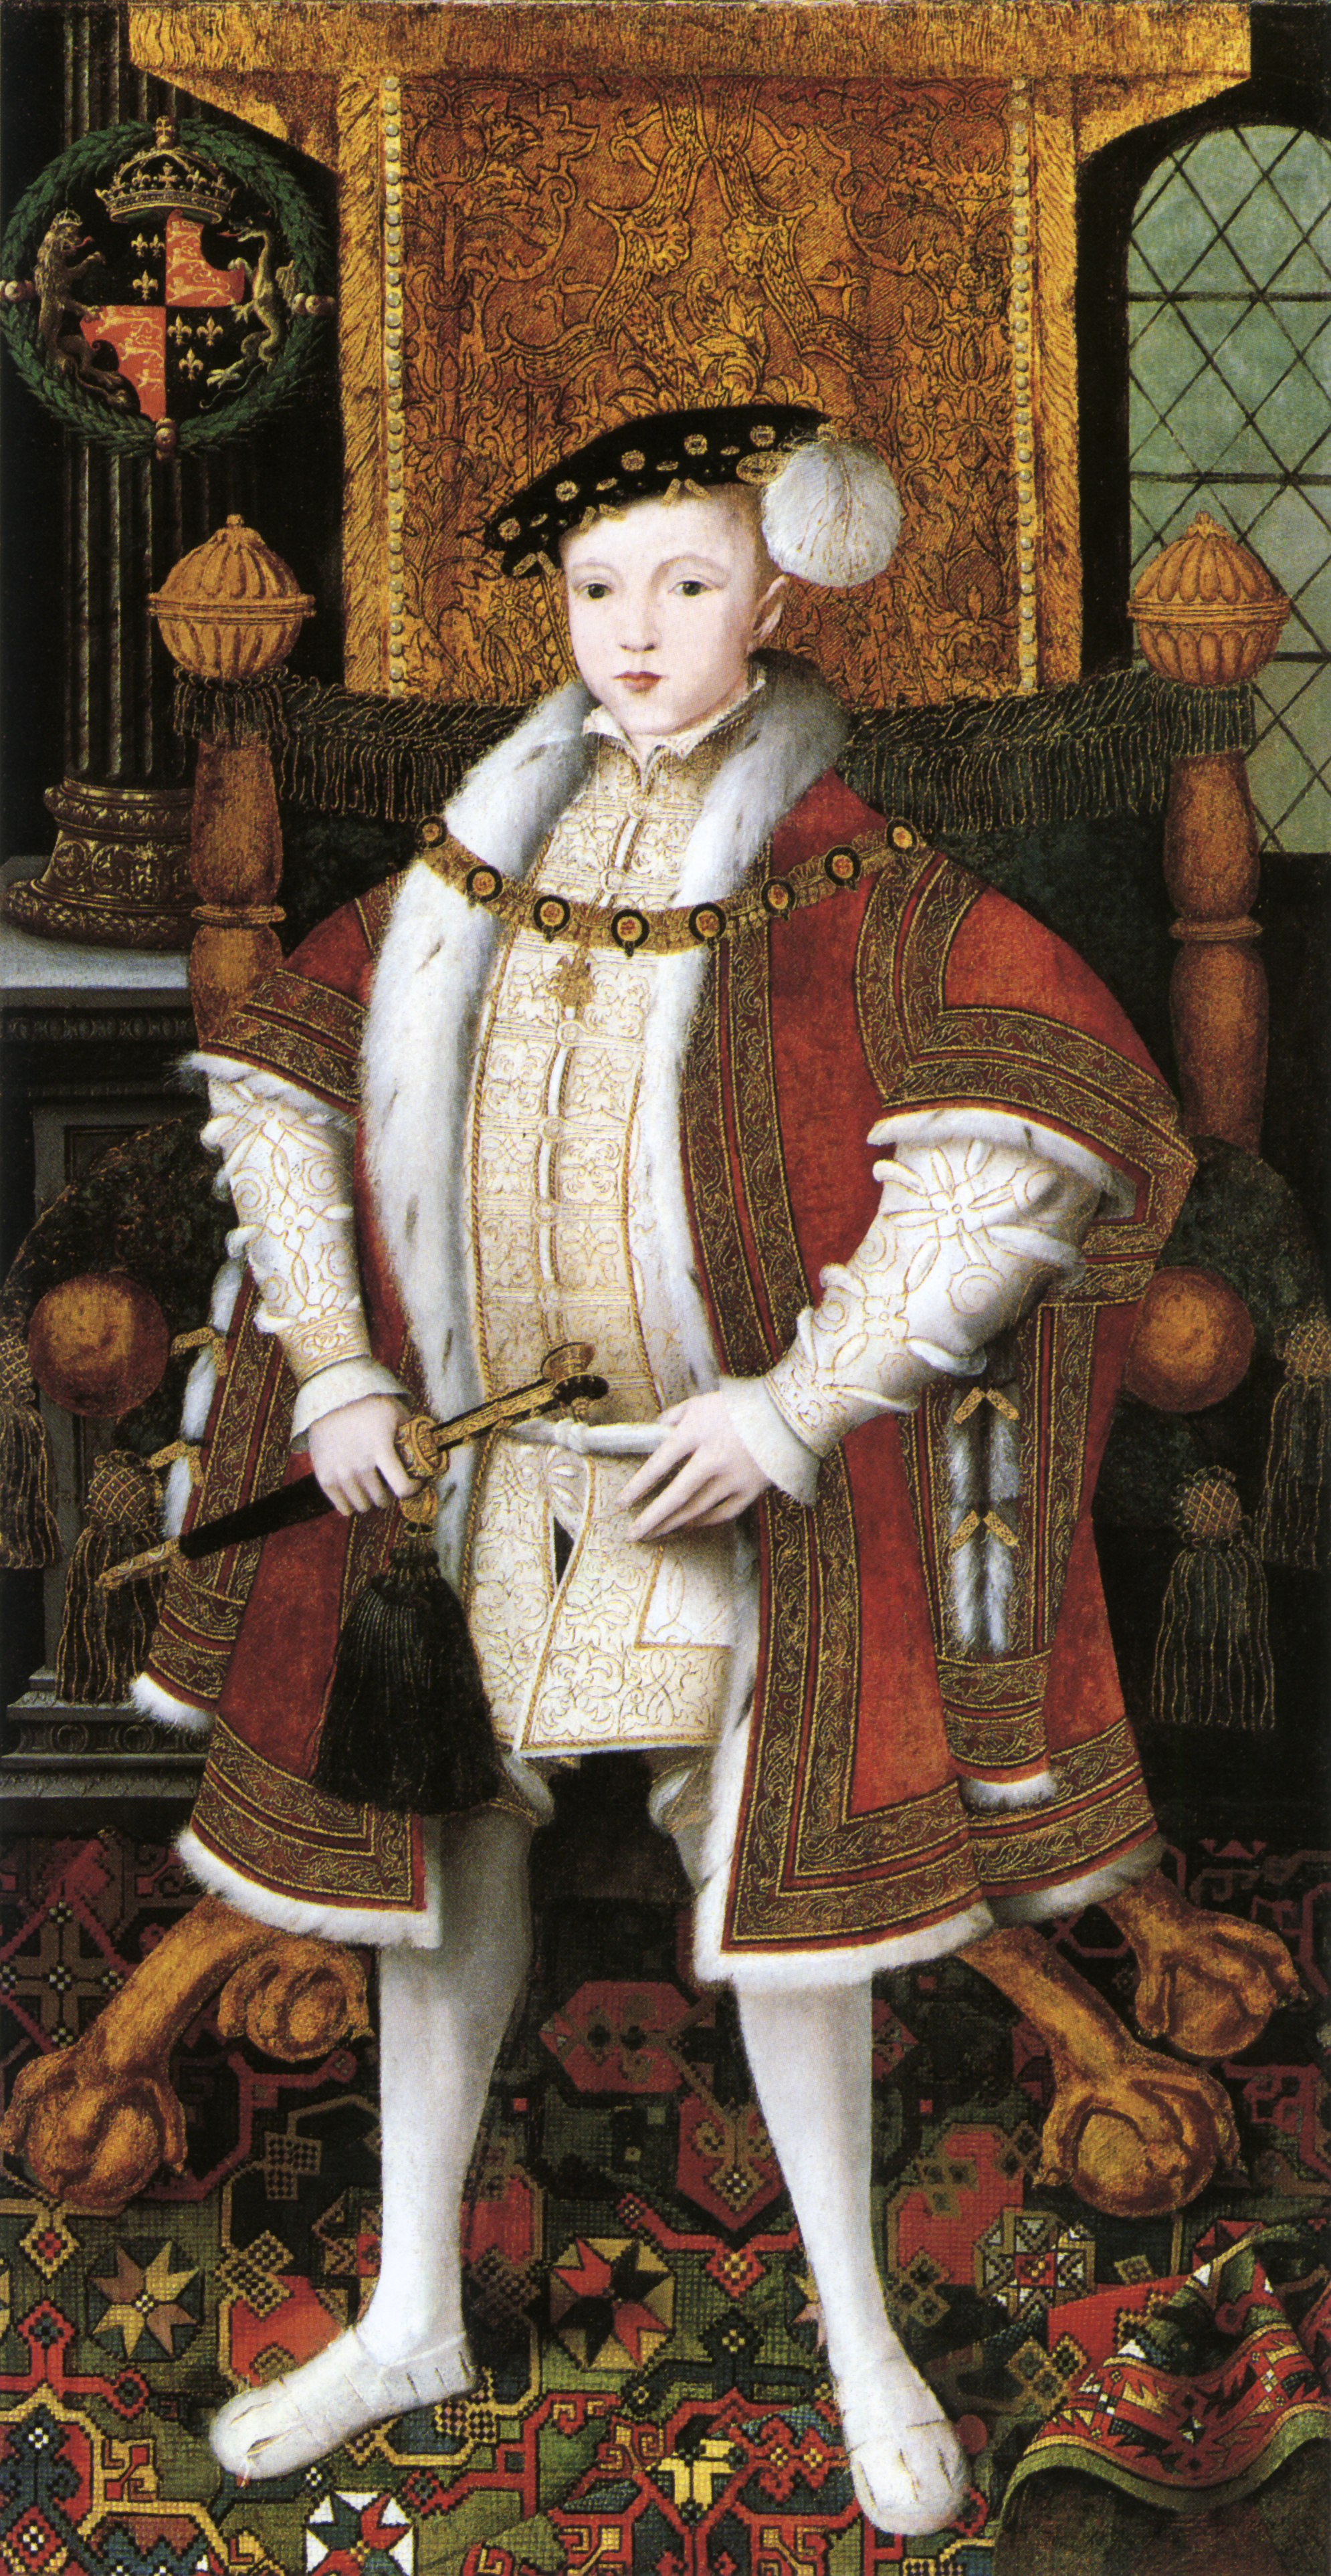 Edward VI swagger